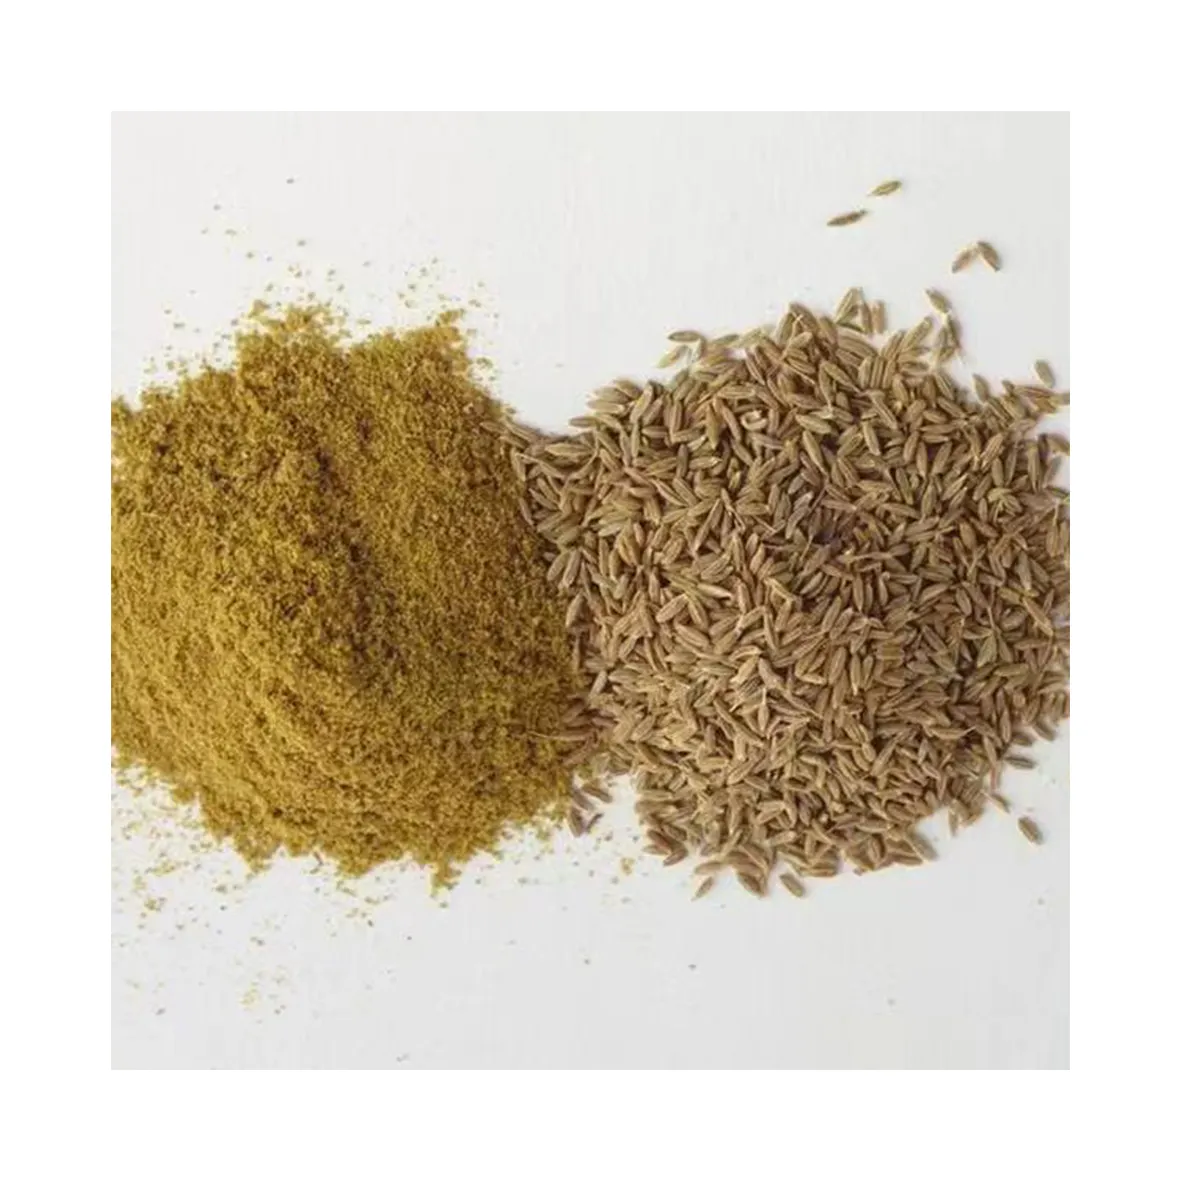 Wholesale Price bottle cumin seeds/powder dried cumin seeds wholesale price single spice